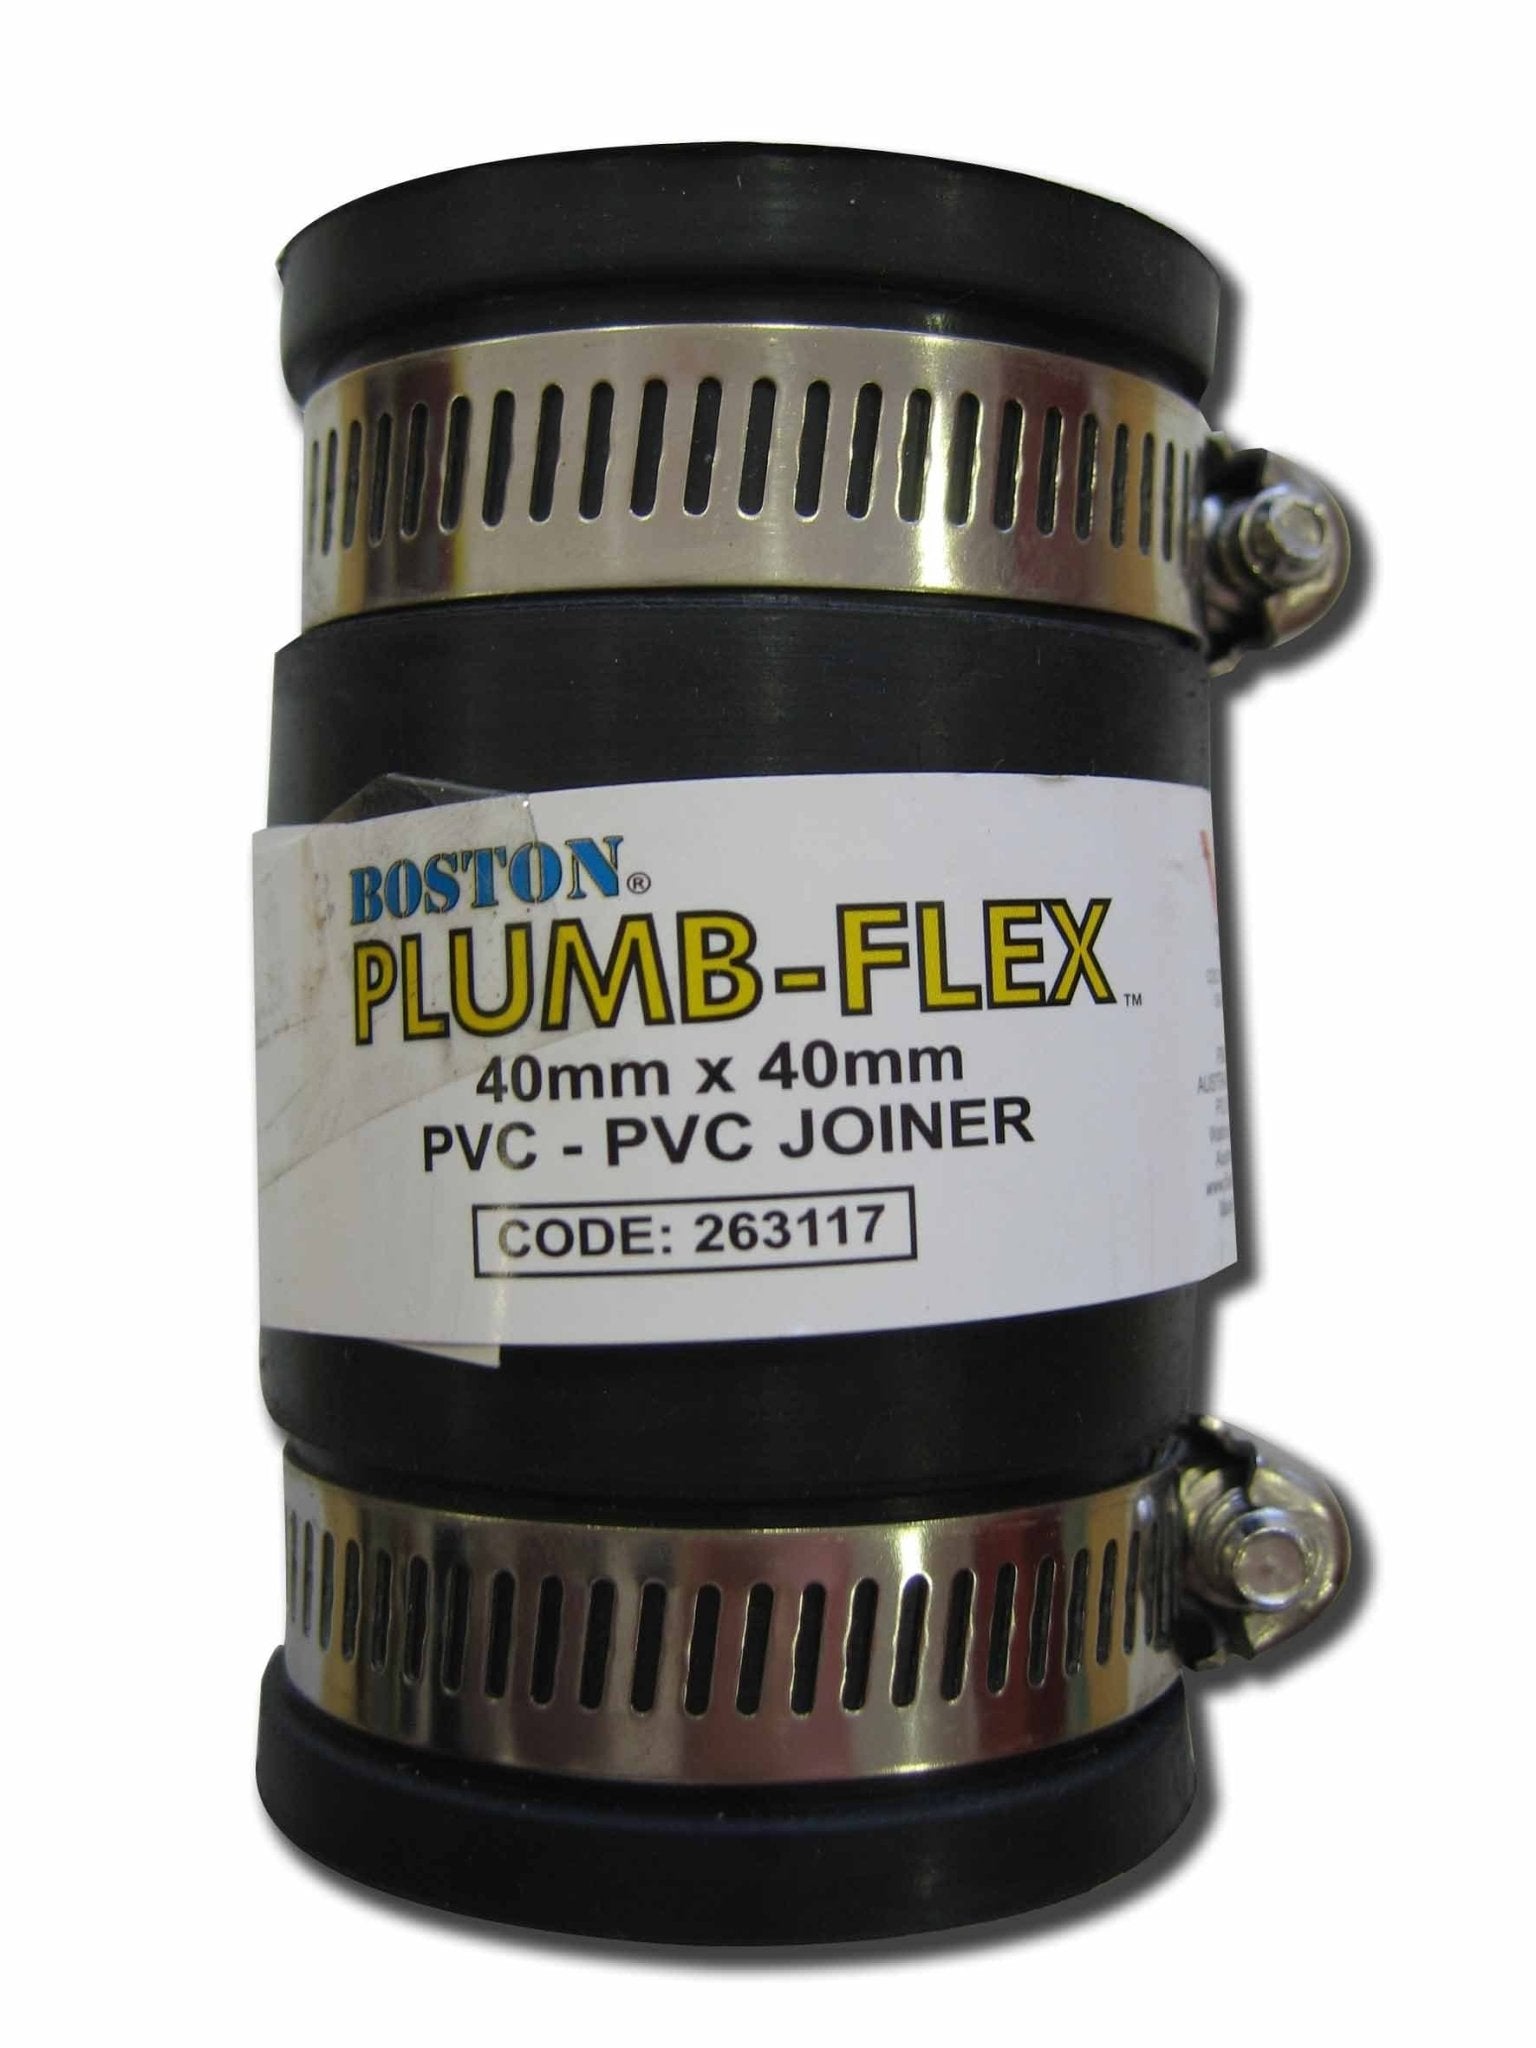 BOSTON Plumb-Flex DWV PVC Rubber Joiner 40mmX40mm 263117 - Double Bay Hardware